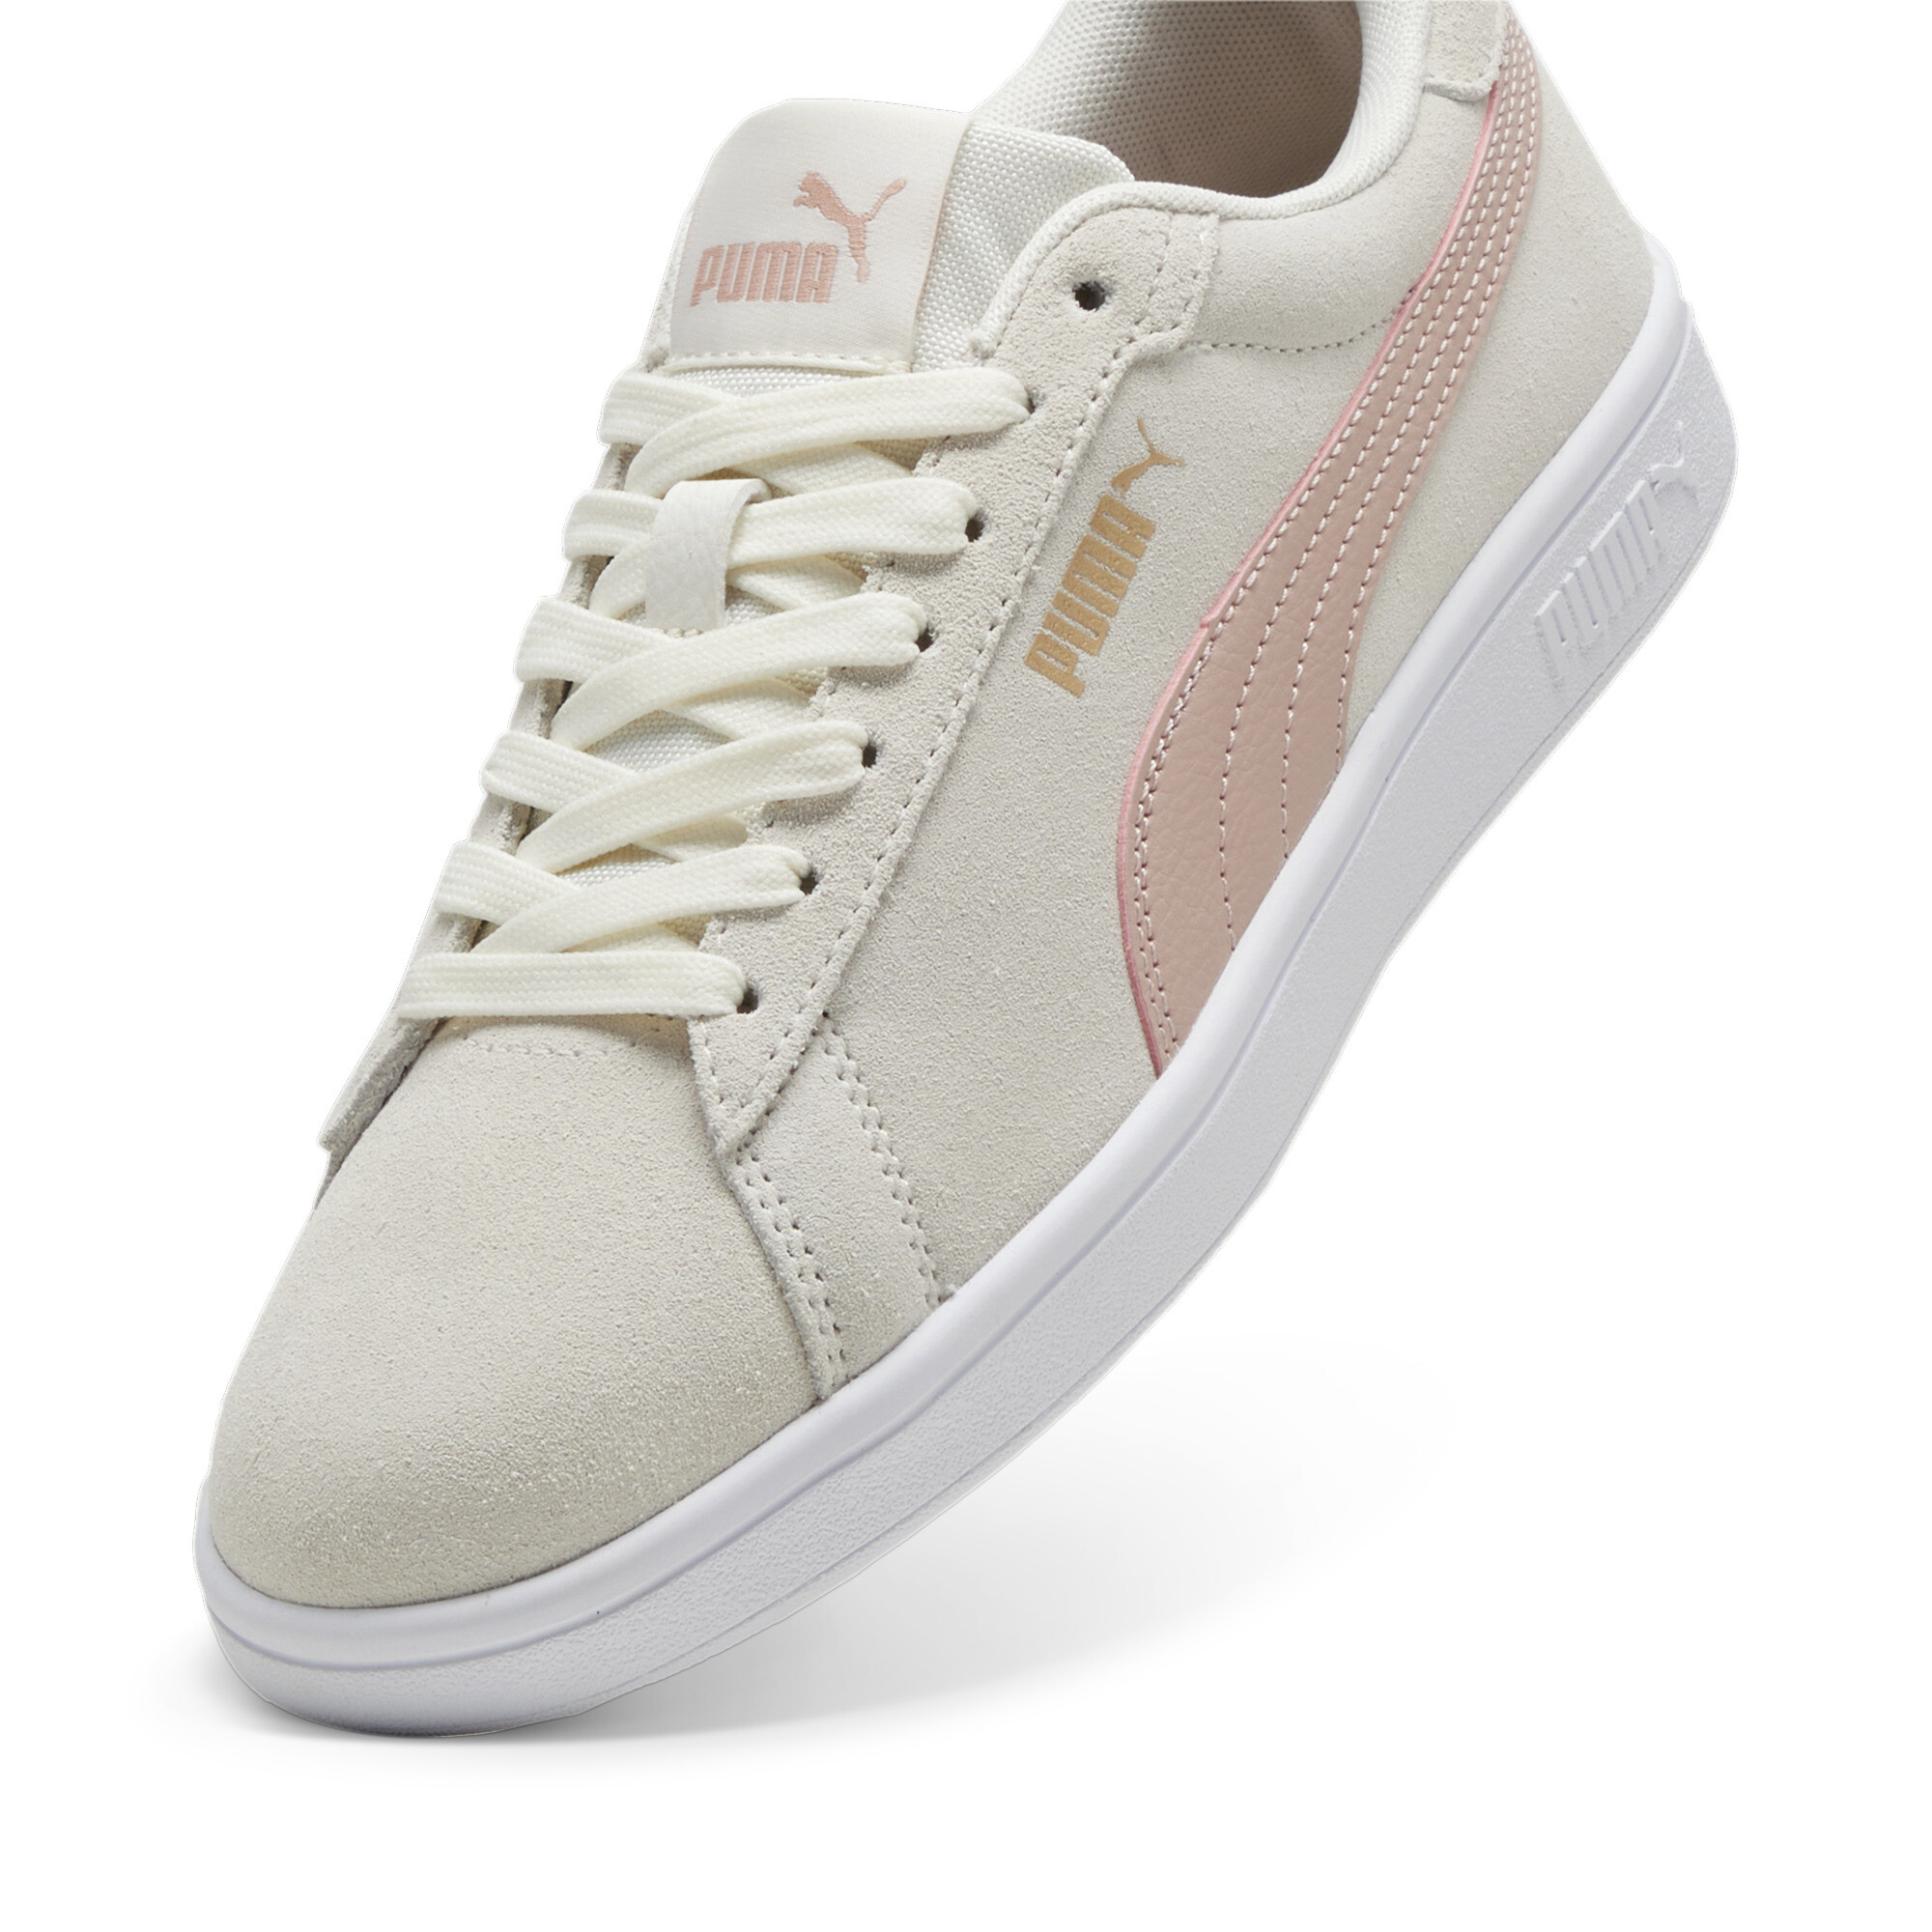 Puma Smash 3.0 Sneakers, White, Size 40.5, Shoes